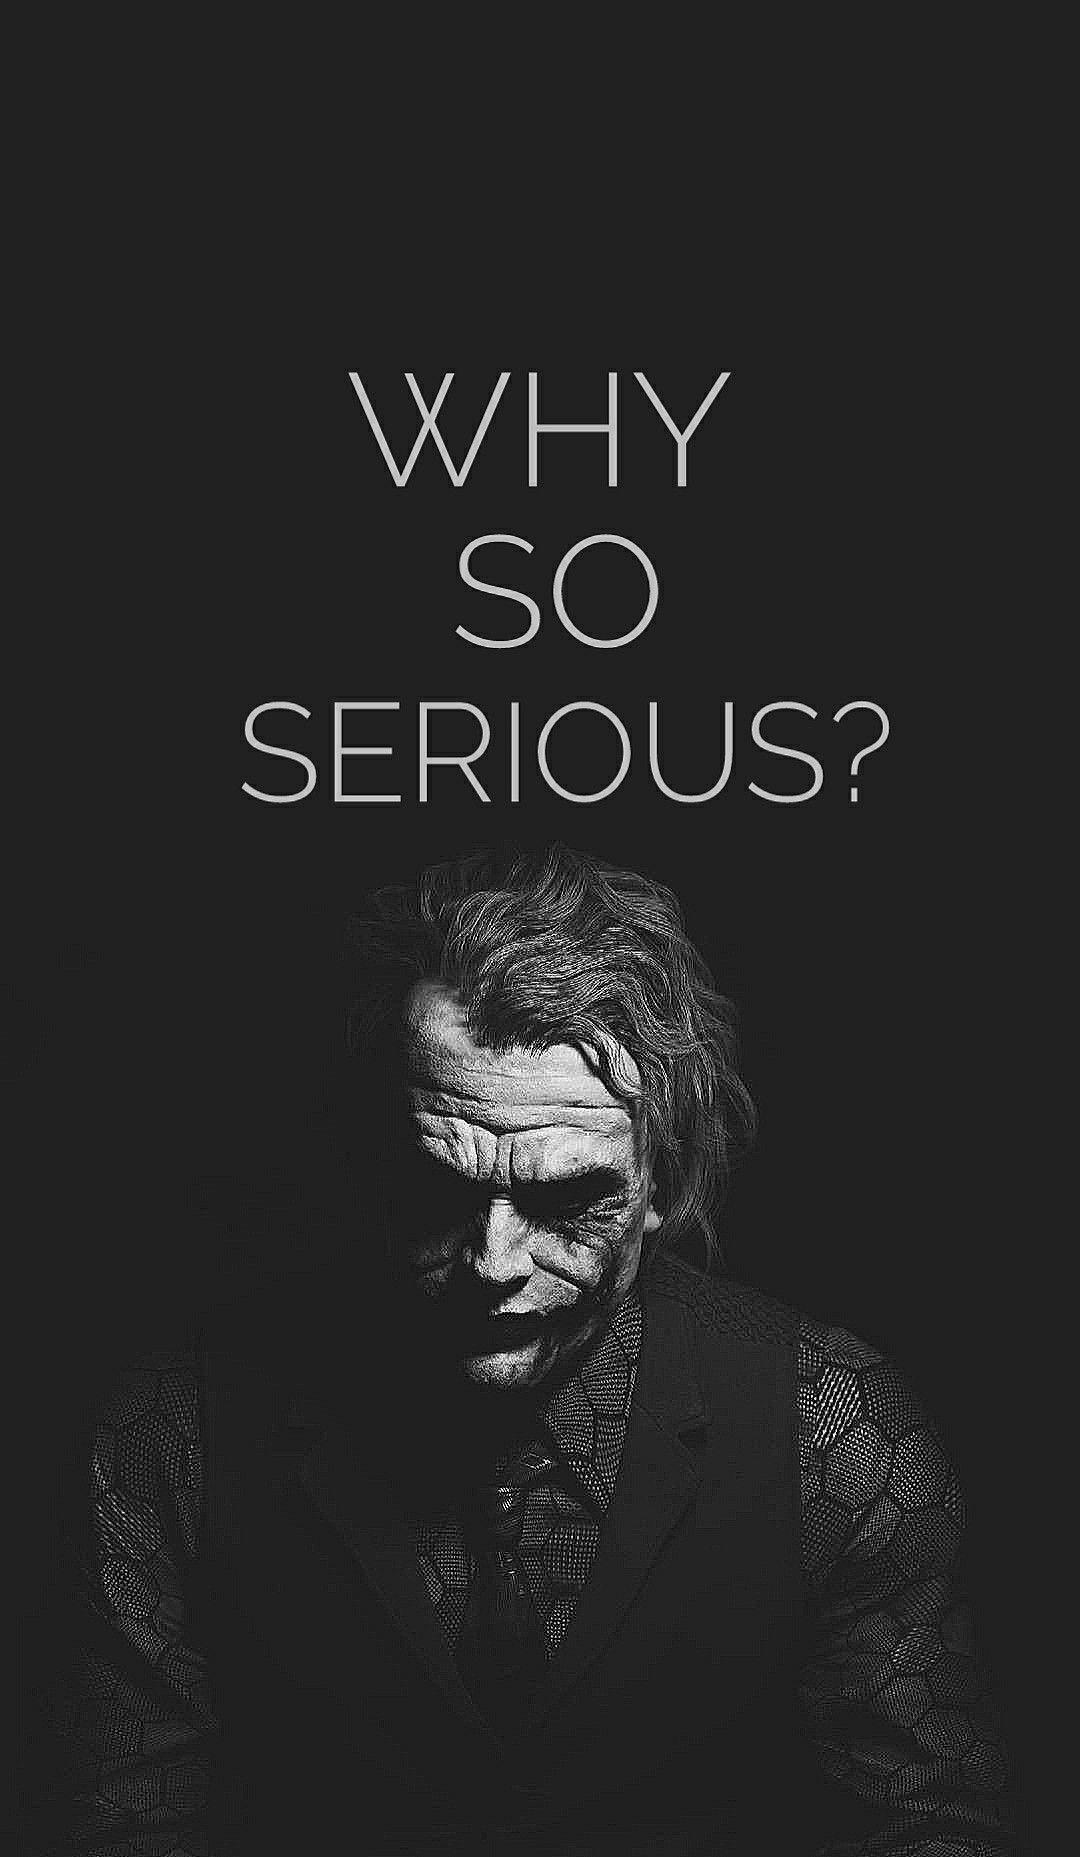 Why so serious??!!. Batman joker wallpaper, Joker wallpaper, Joker artwork